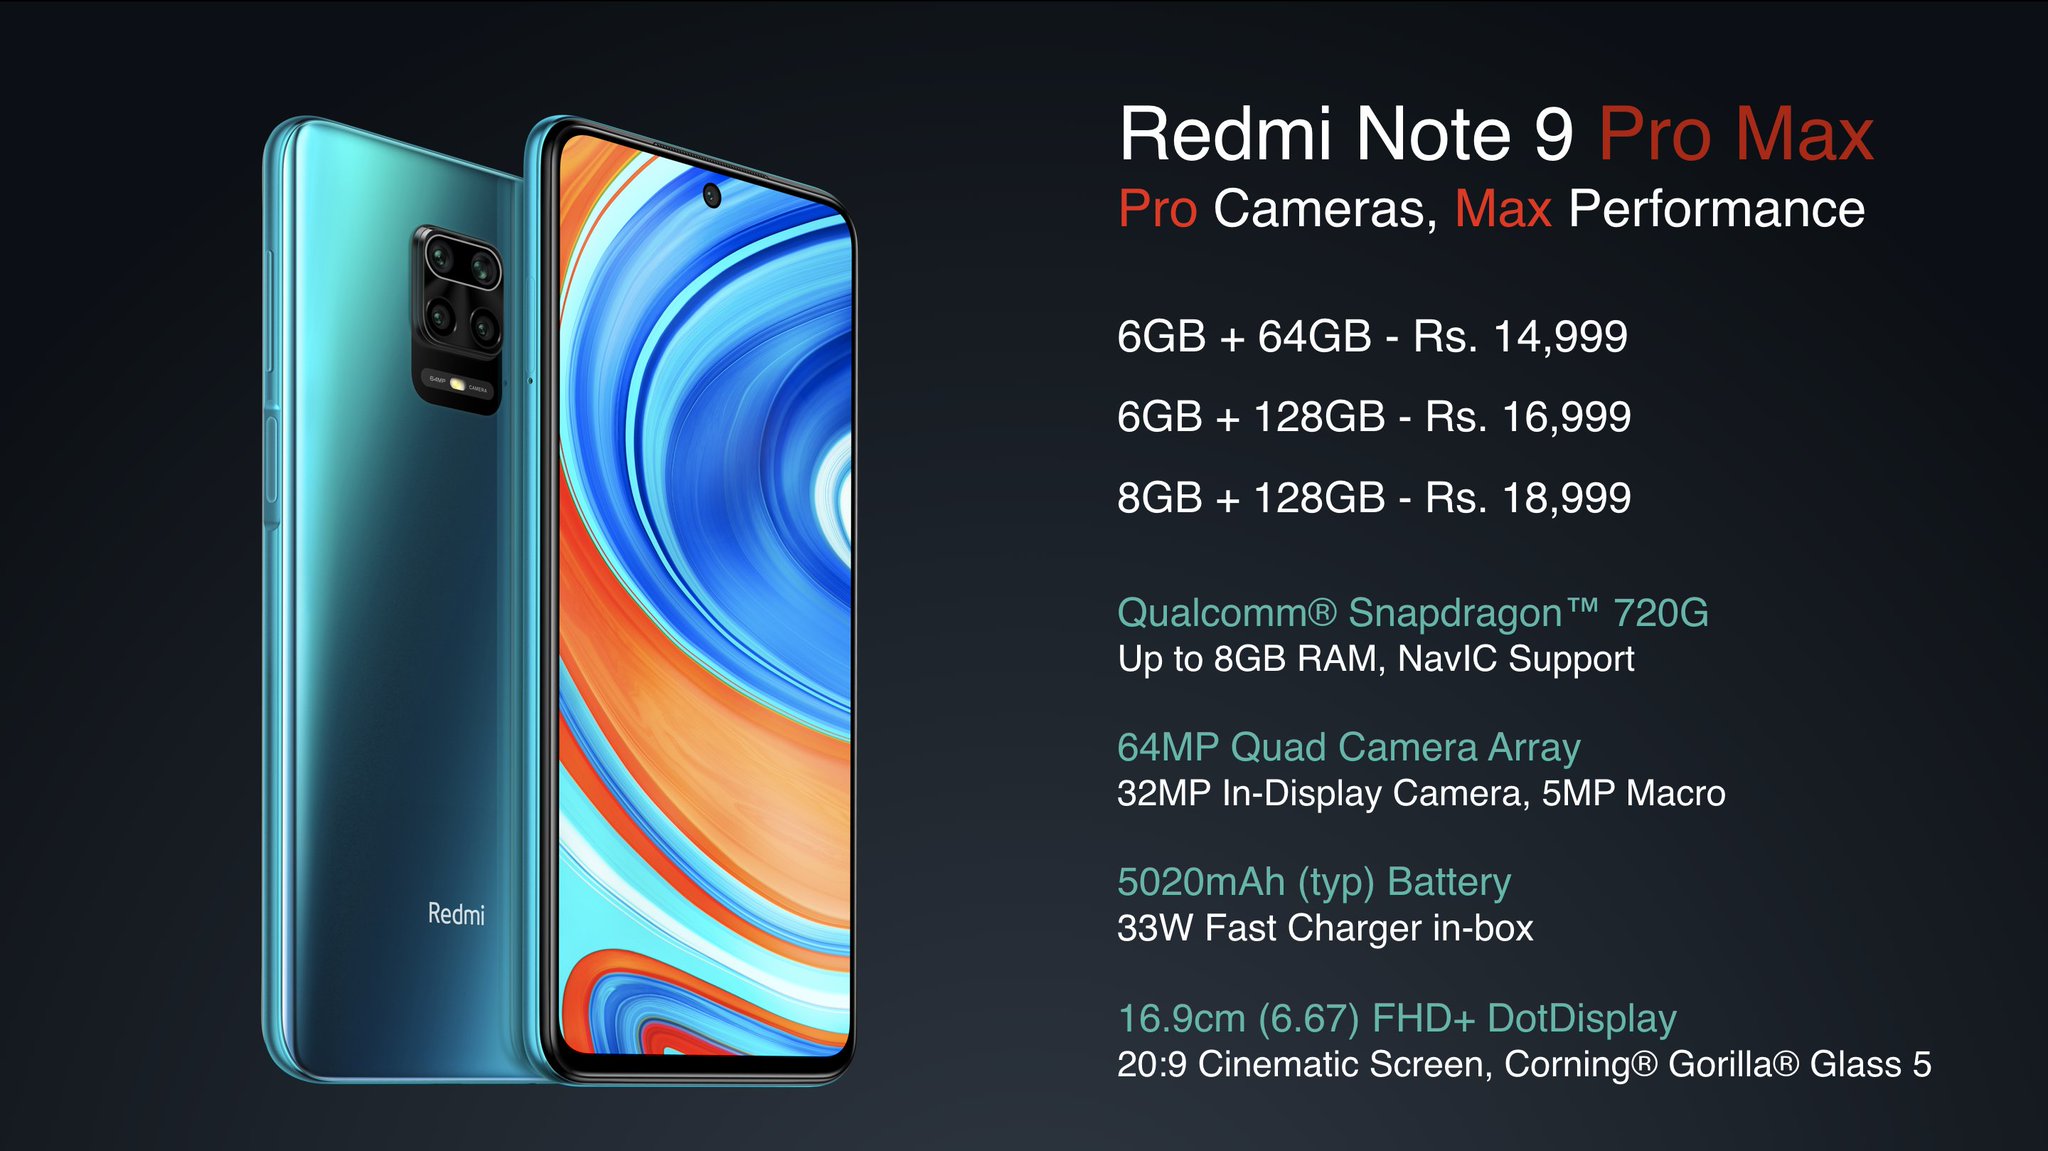 Redmi Note 9 Pro Max Flash Sale Date, Time & Script to Buy Trick